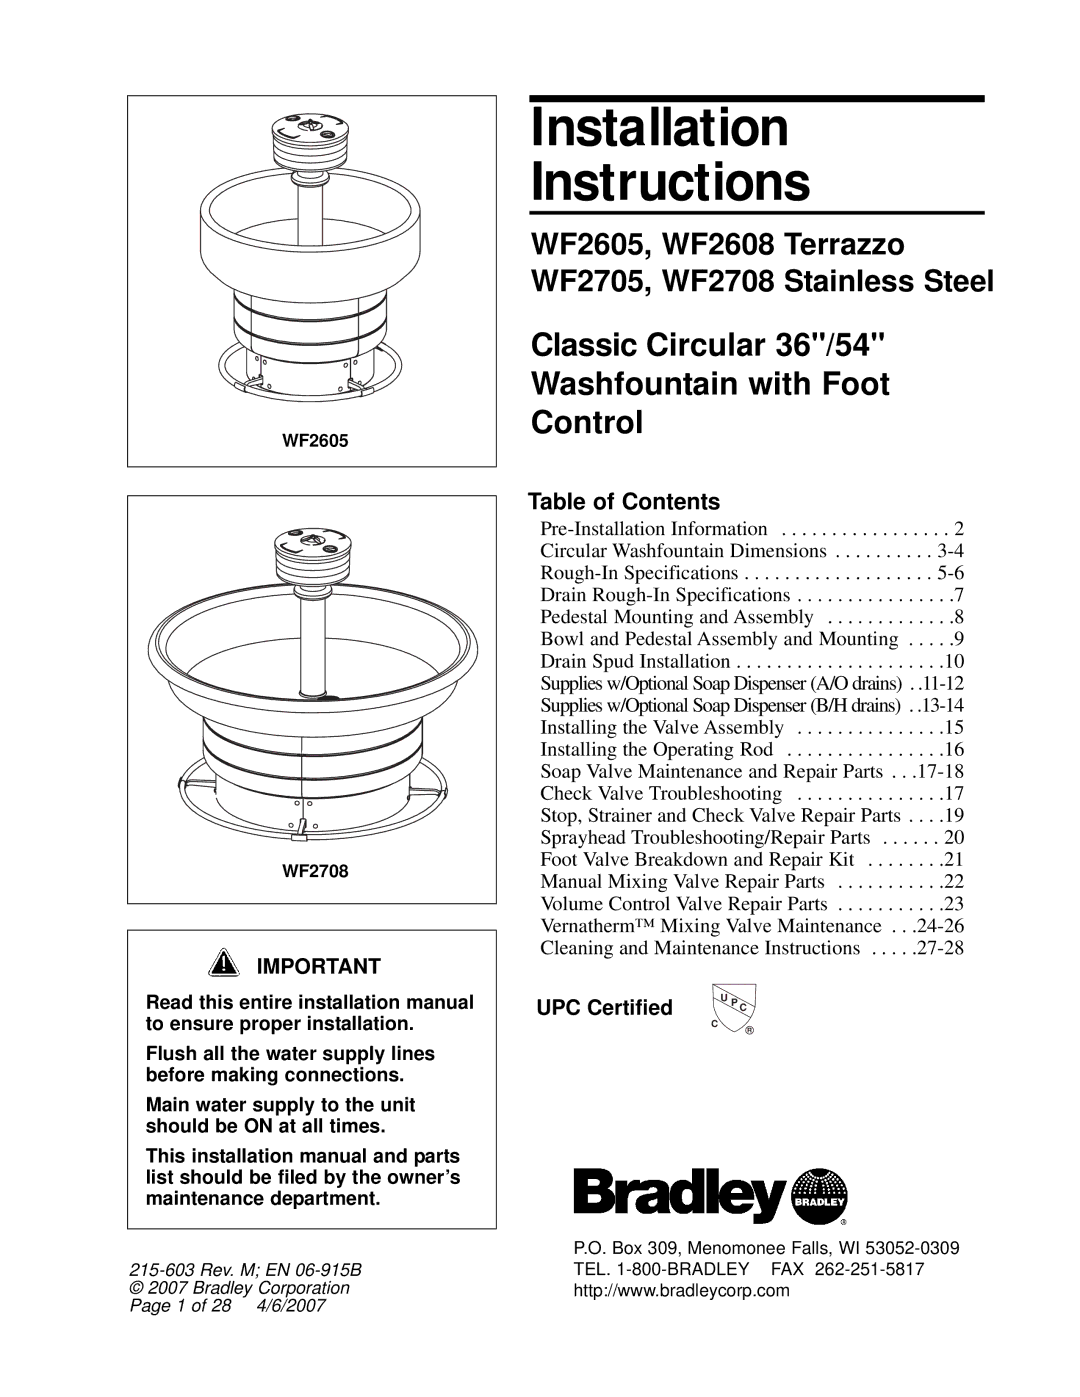 Bradley Smoker WF2605, WF2708 installation instructions Installation Instructions, Table of Contents 